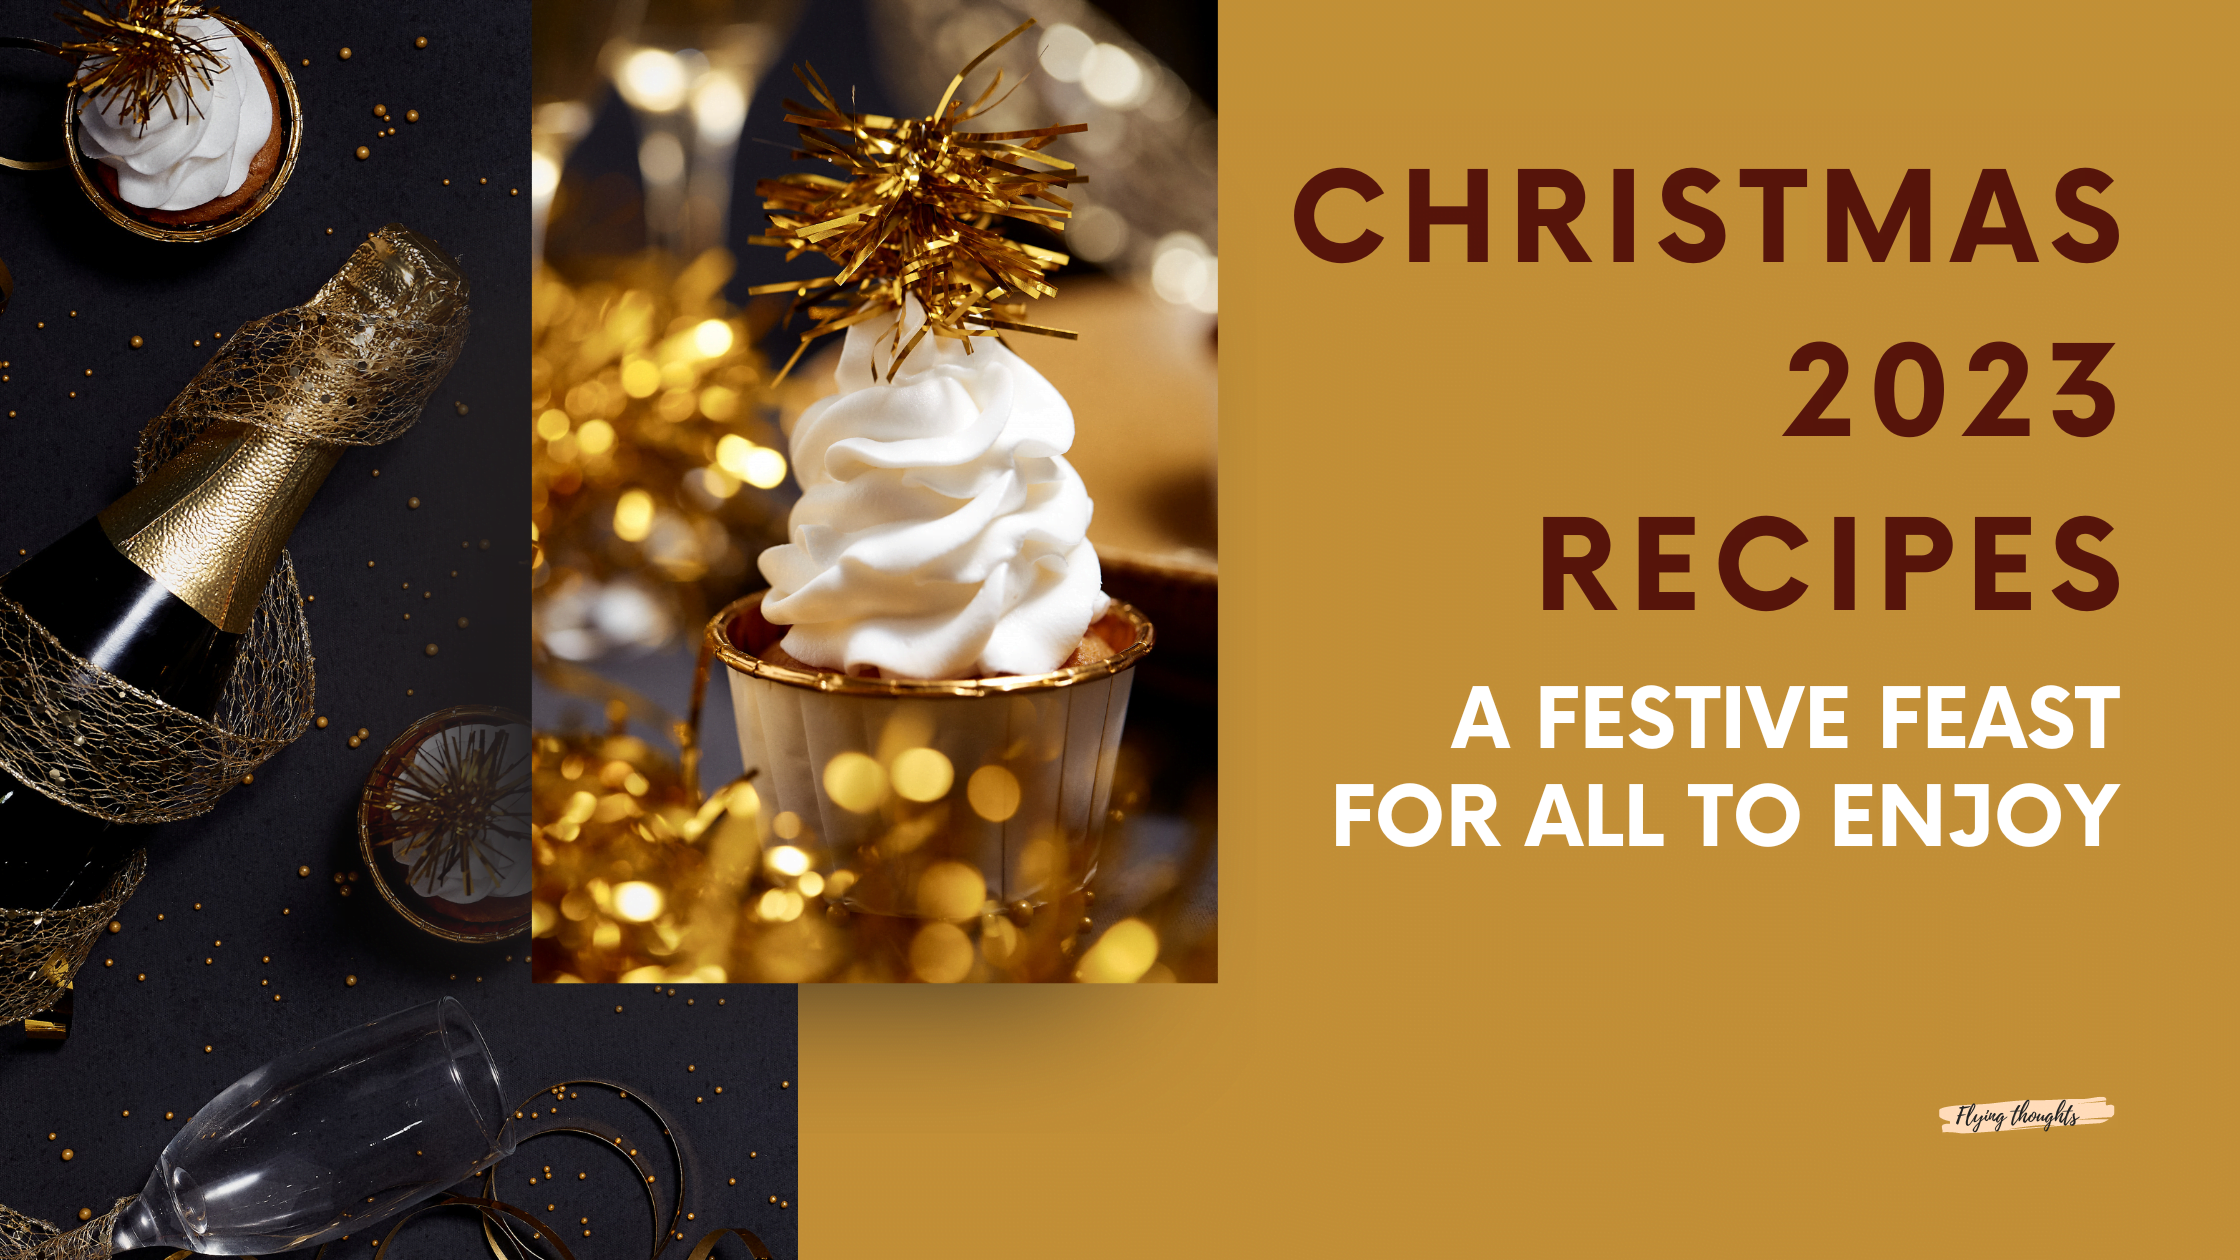 Christmas 2023 Recipes: A Festive Feast for All to Enjoy”